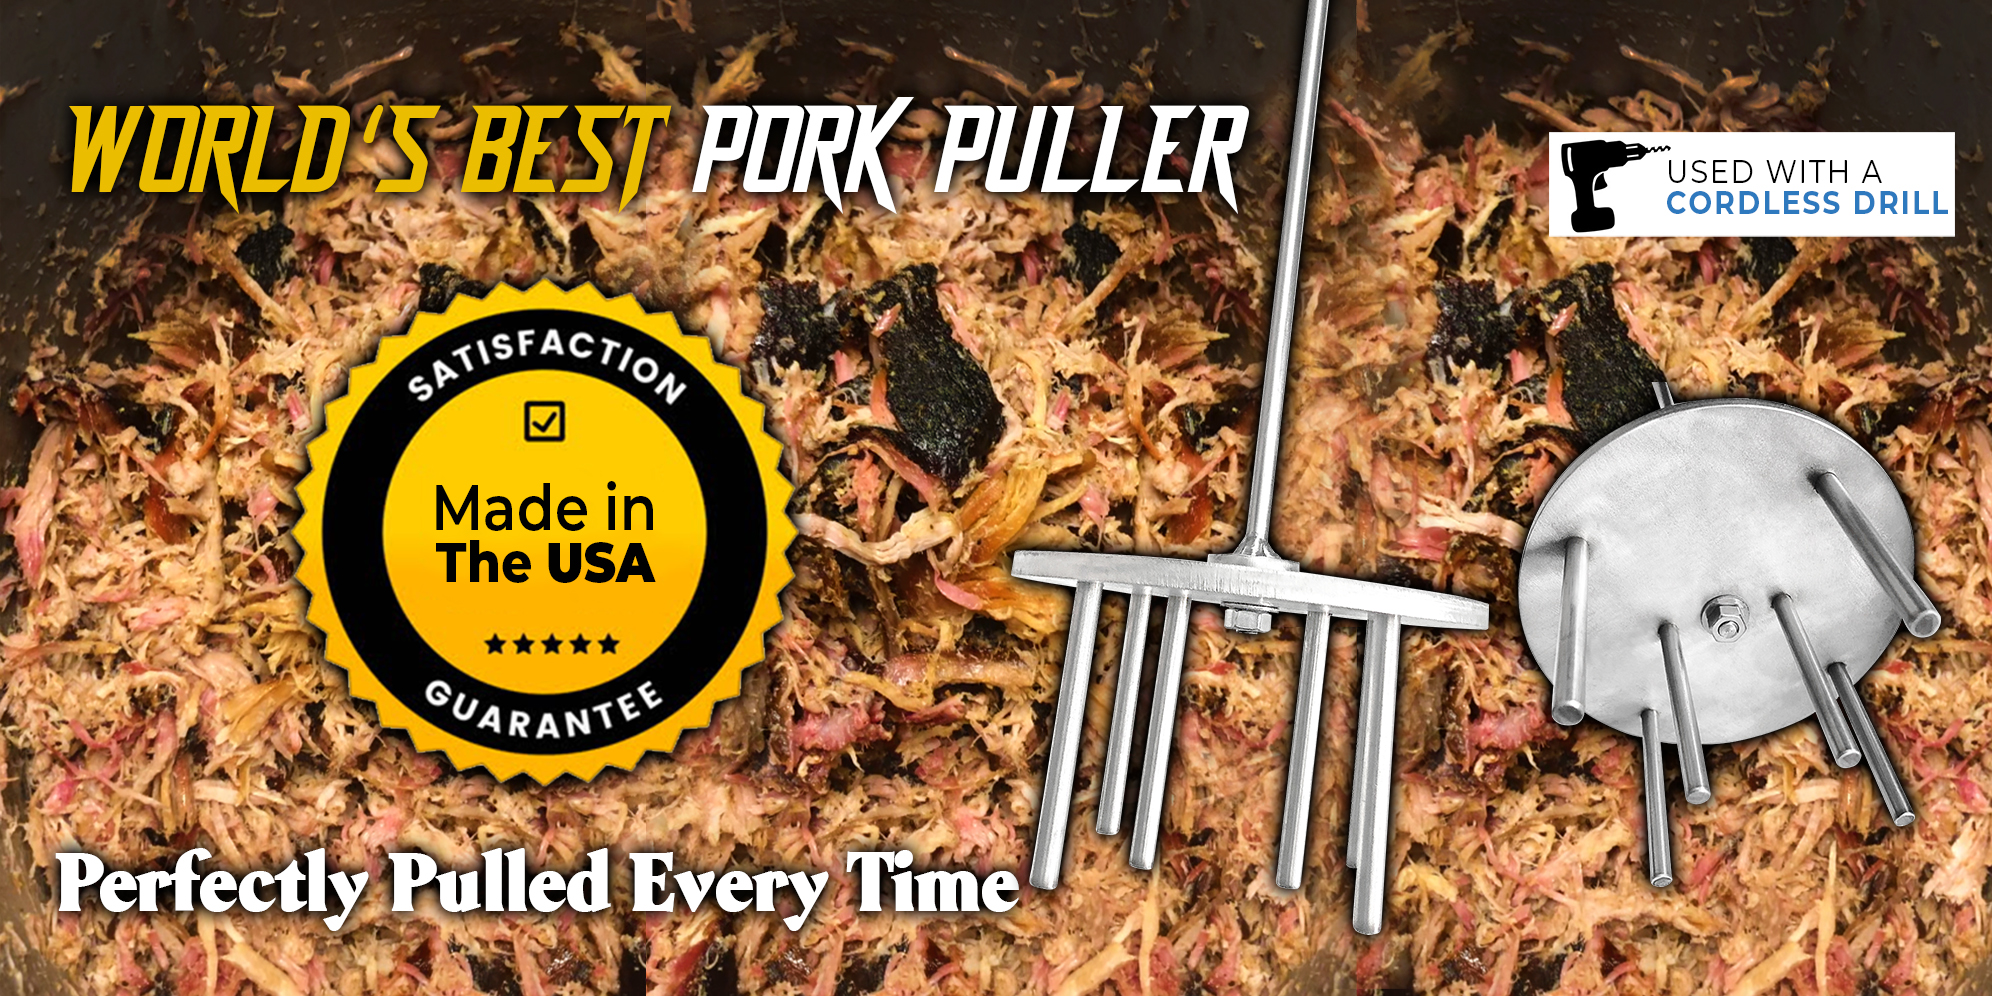 Barbecue World’s Best Pork Puller